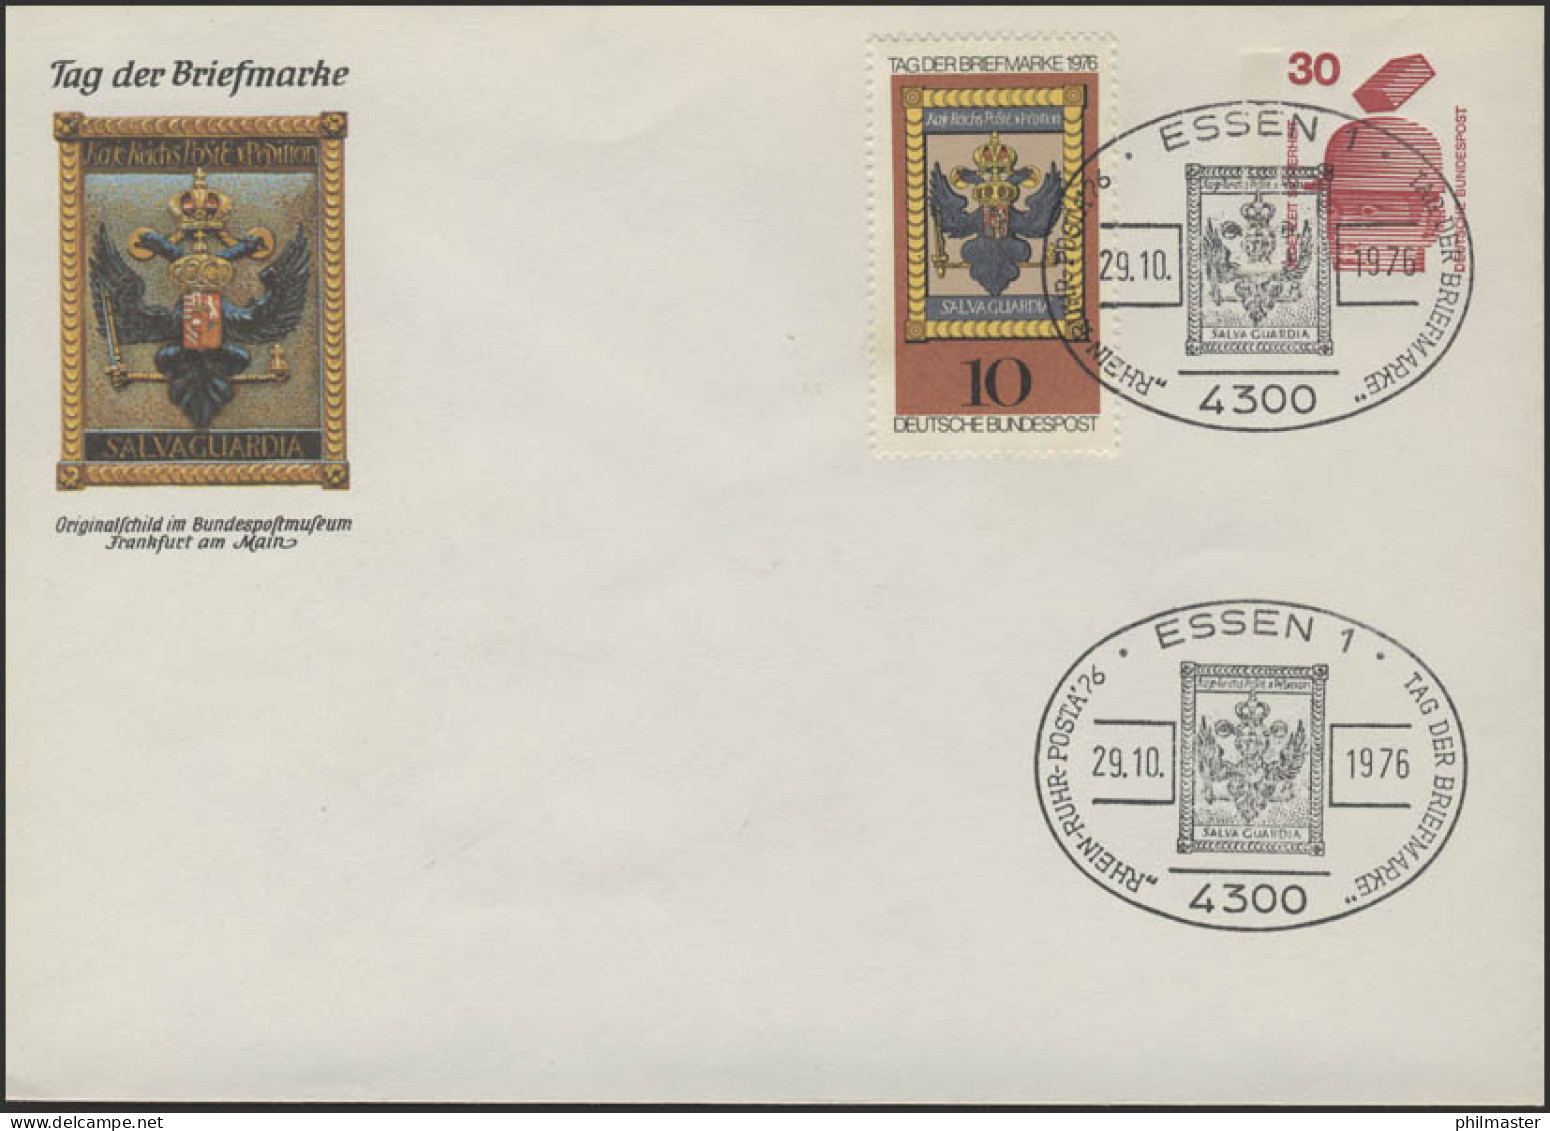 PU 63/20 Unfall 30 Tag Der Briefmarke, SSt Essen Posthausschild 20.10.1976  - Private Covers - Mint